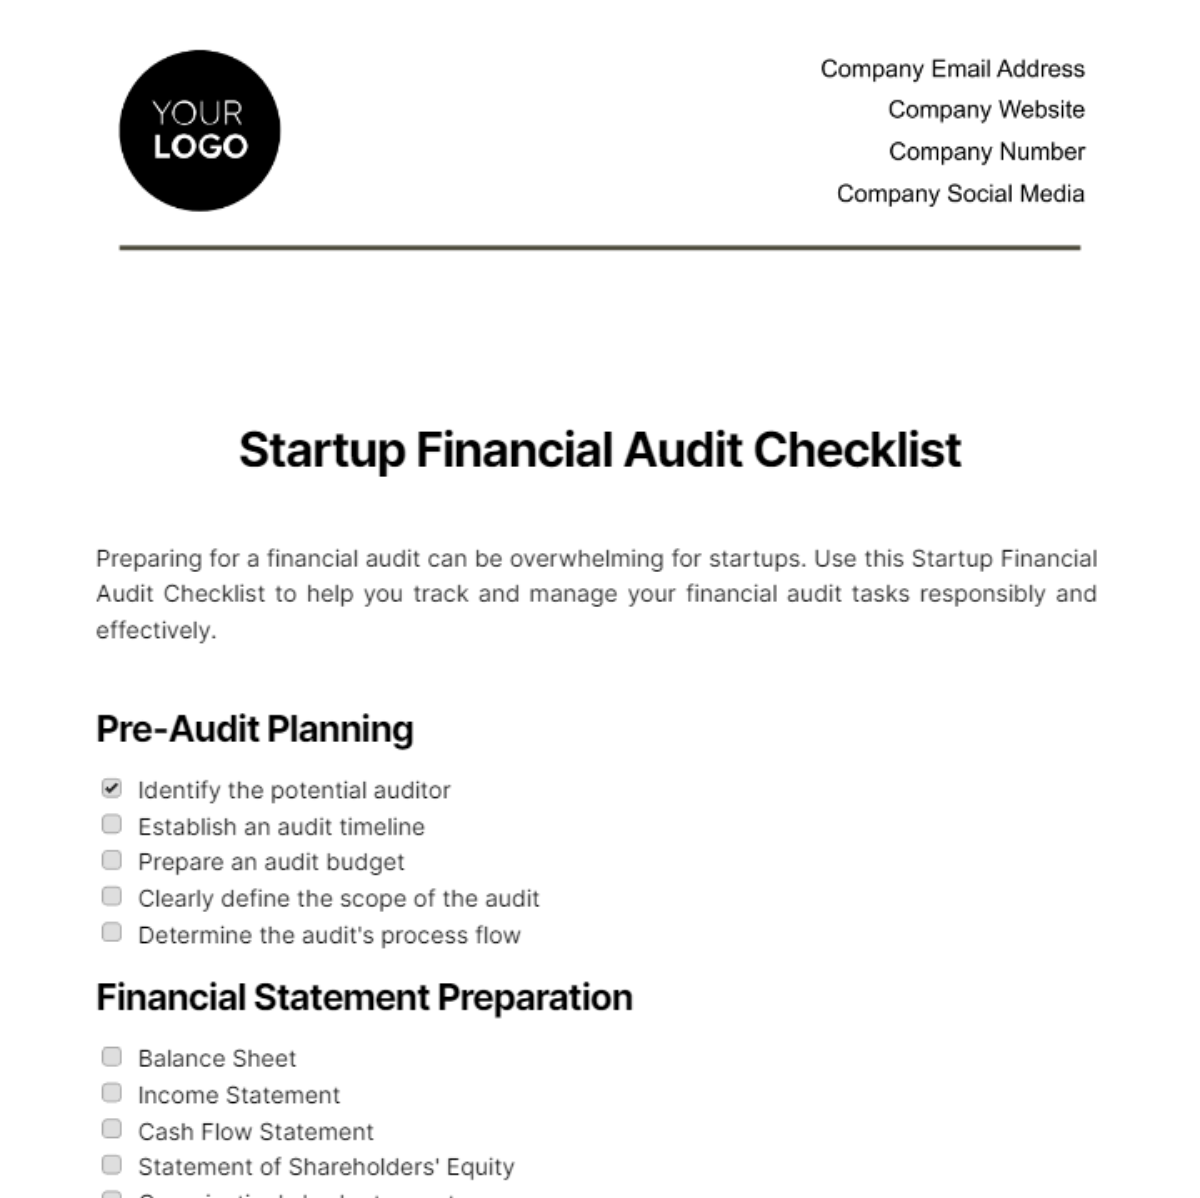 Startup Financial Audit Checklist Template